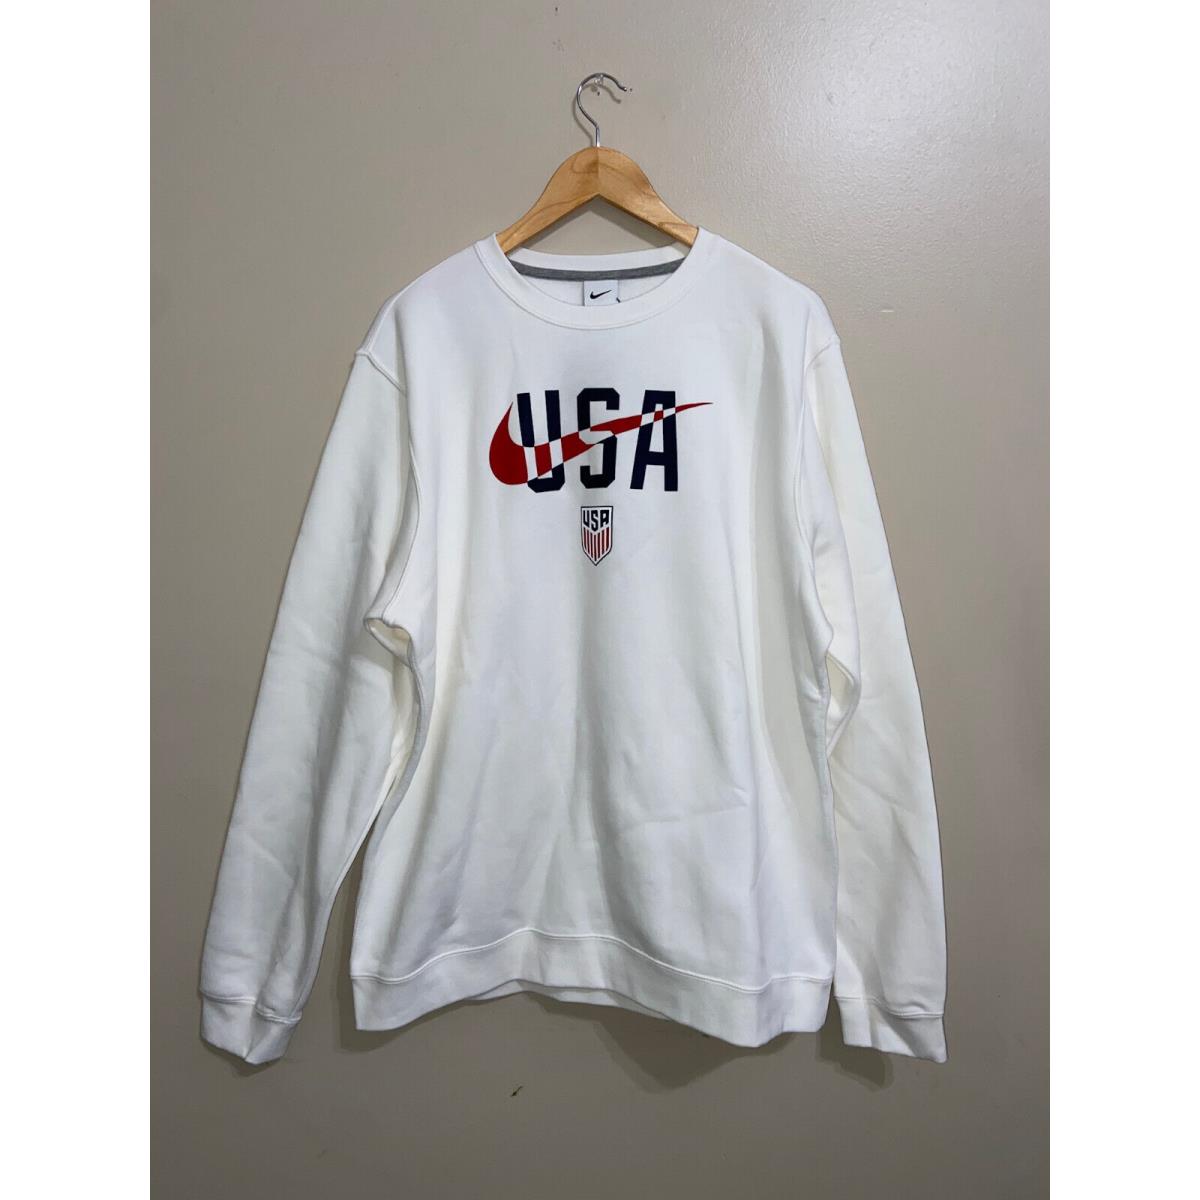 Nike Team Issue Team Usa Soccer Club Fleece Crew Sweatshirt White Mens XL